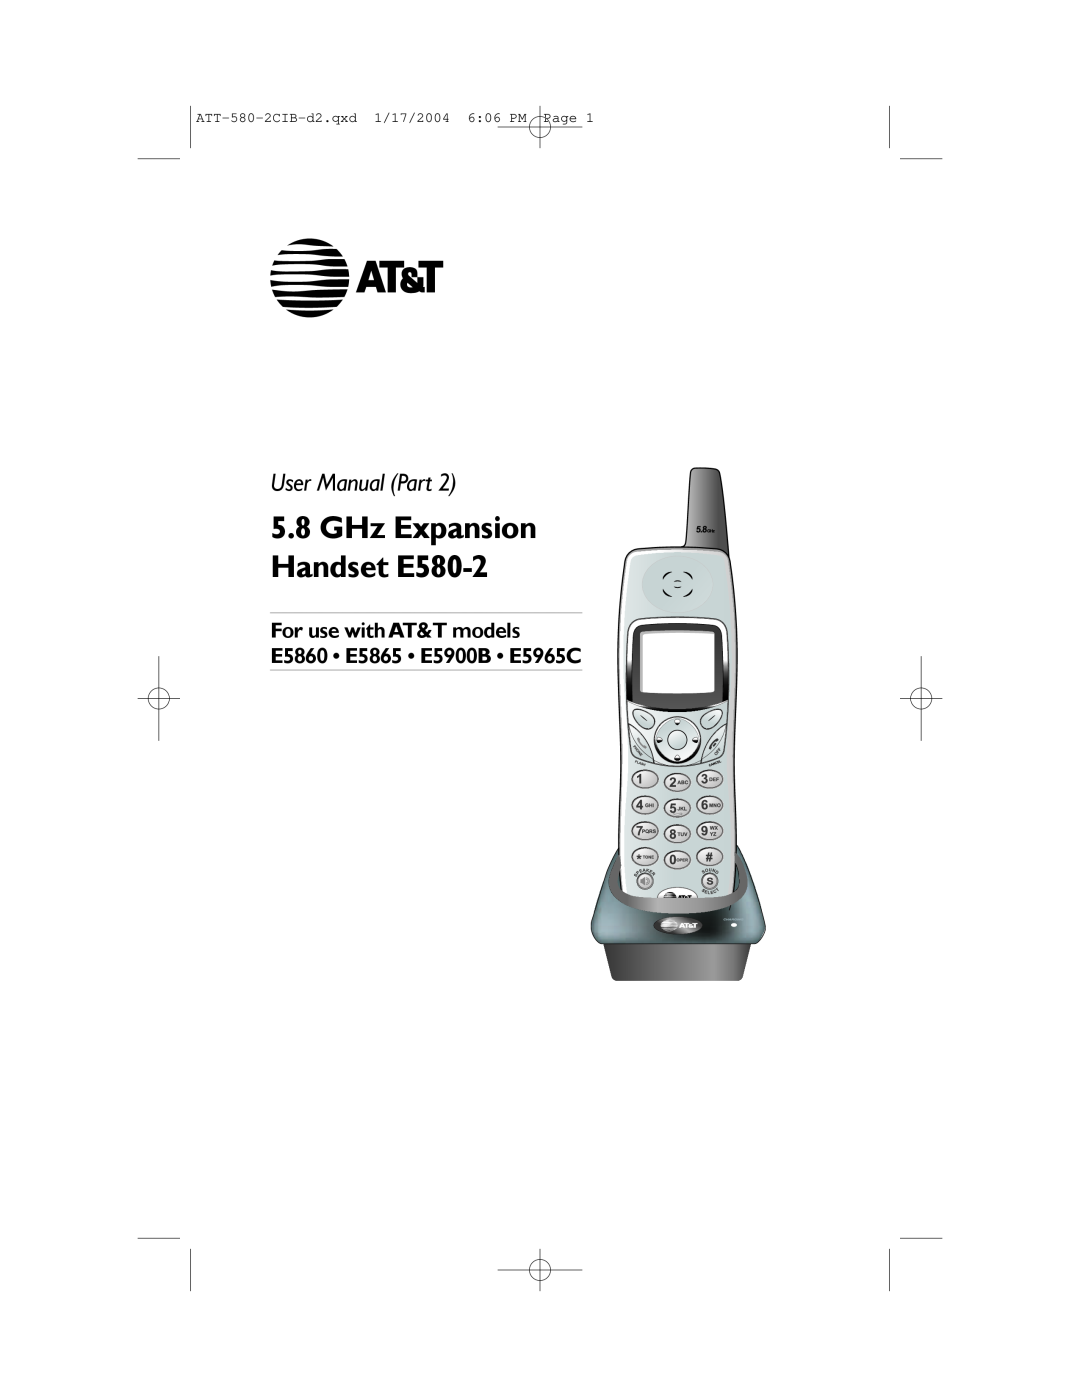 AT&T user manual GHz Expansion Handset E580-2, User Manual Part, For use with AT&T models E5860 E5865 E5900B E5965C 